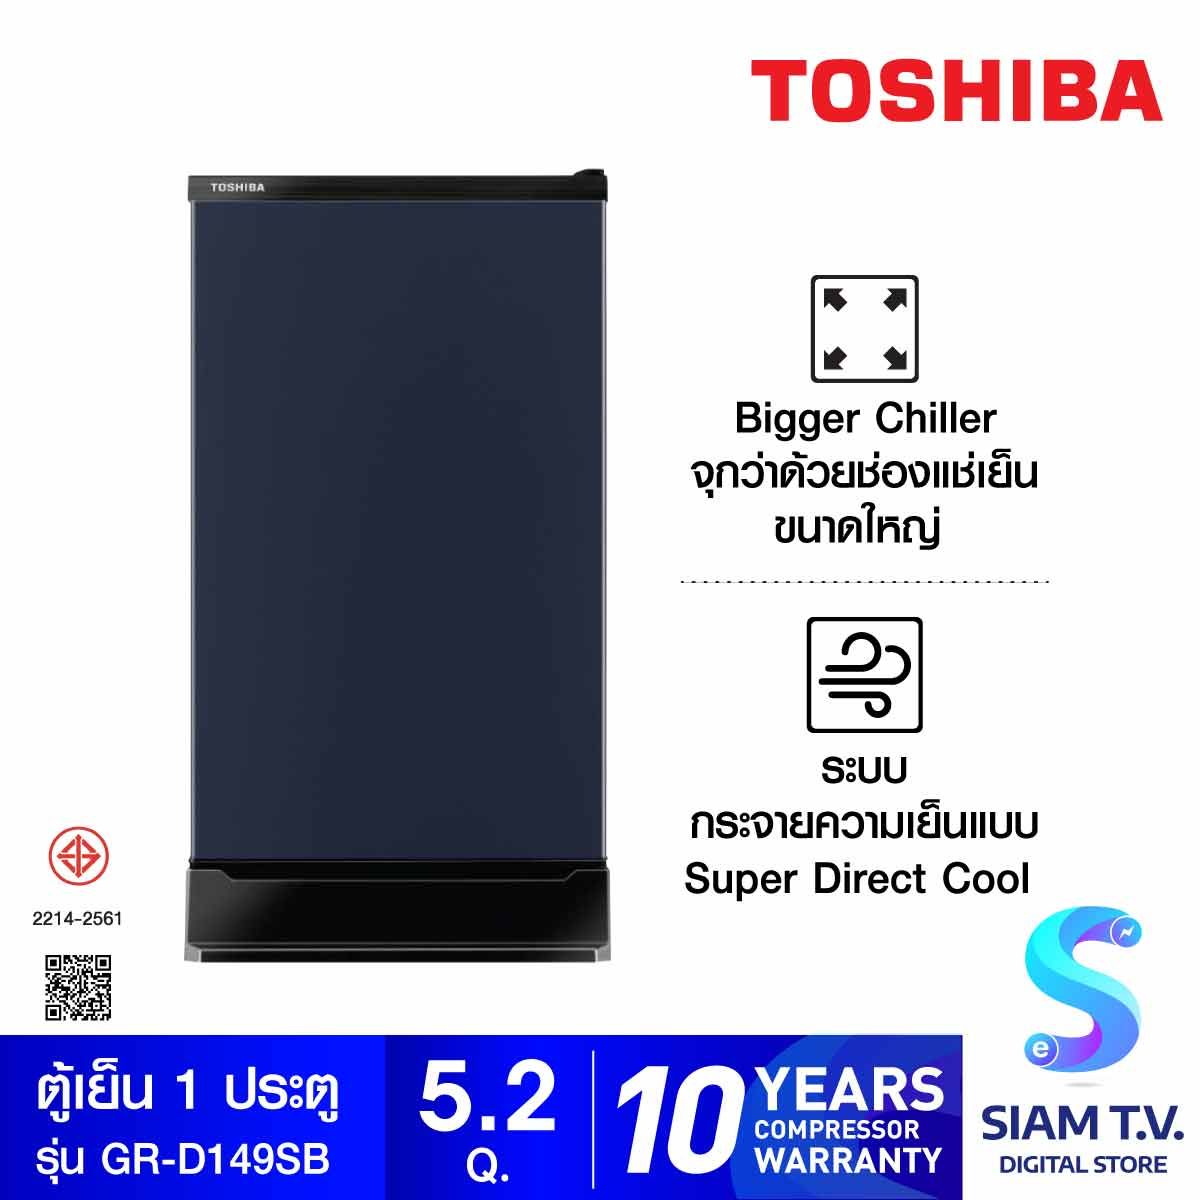 TOSHIBA ตู้เย็น 1 ประตู ขนาด 5.2 คิว สีน้ำเงิน รุ่น GR-D149